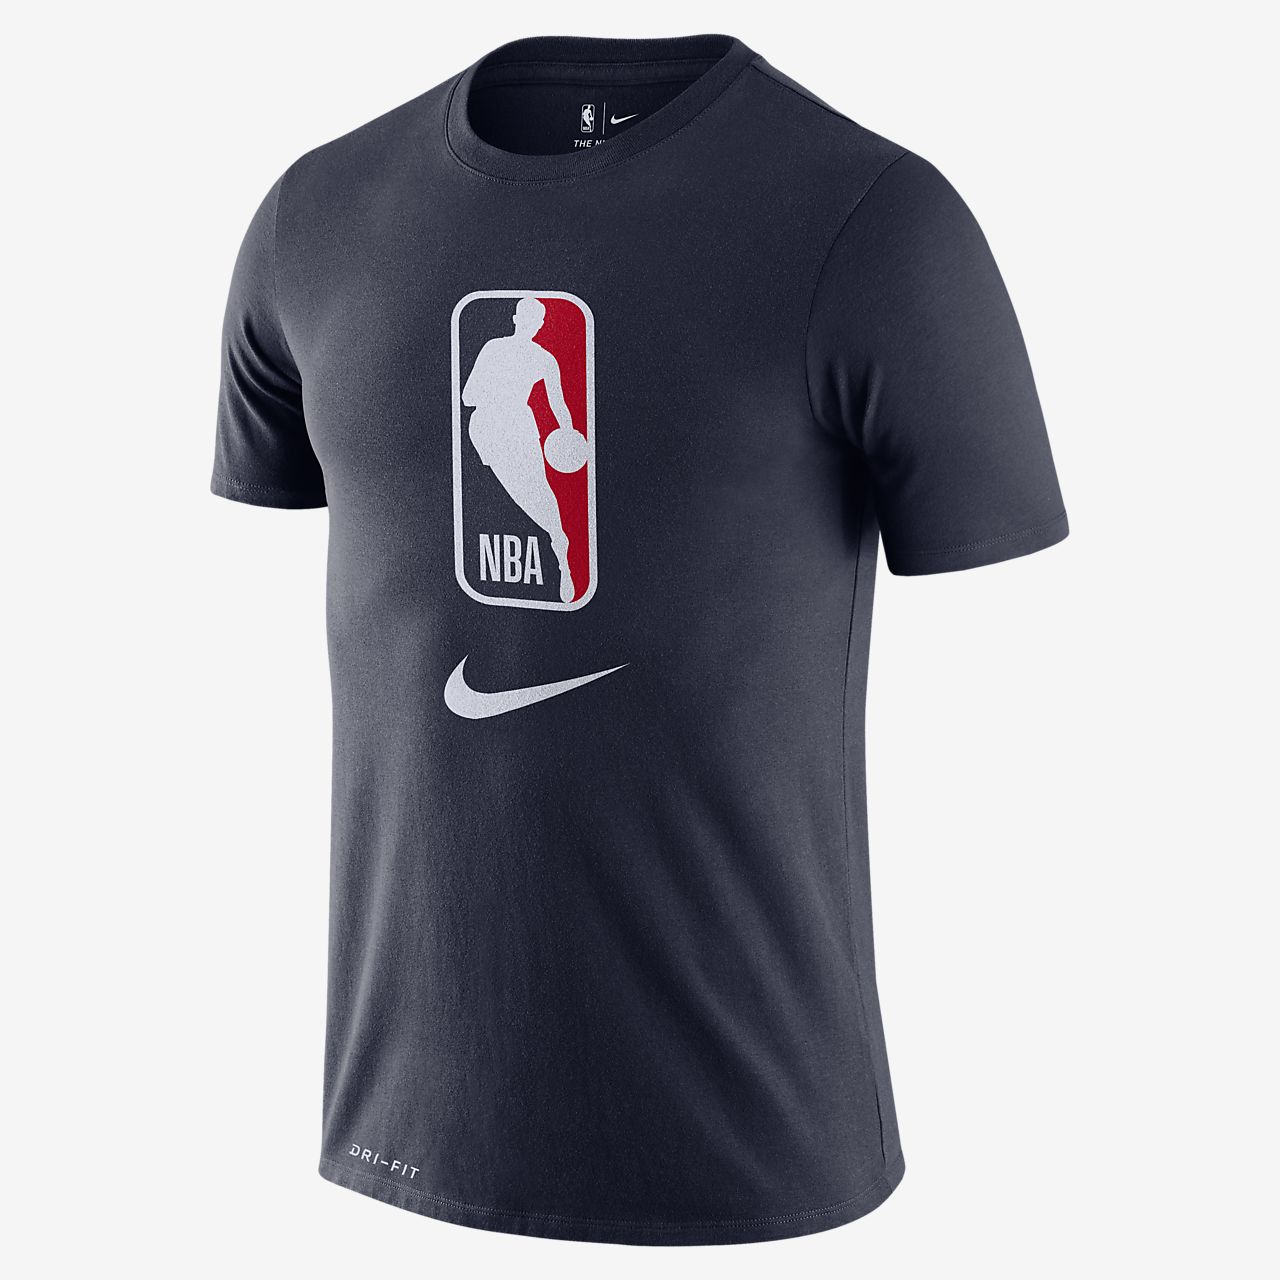 Team 31 Men's Nike Dri-FIT NBA T-Shirt. Nike IL